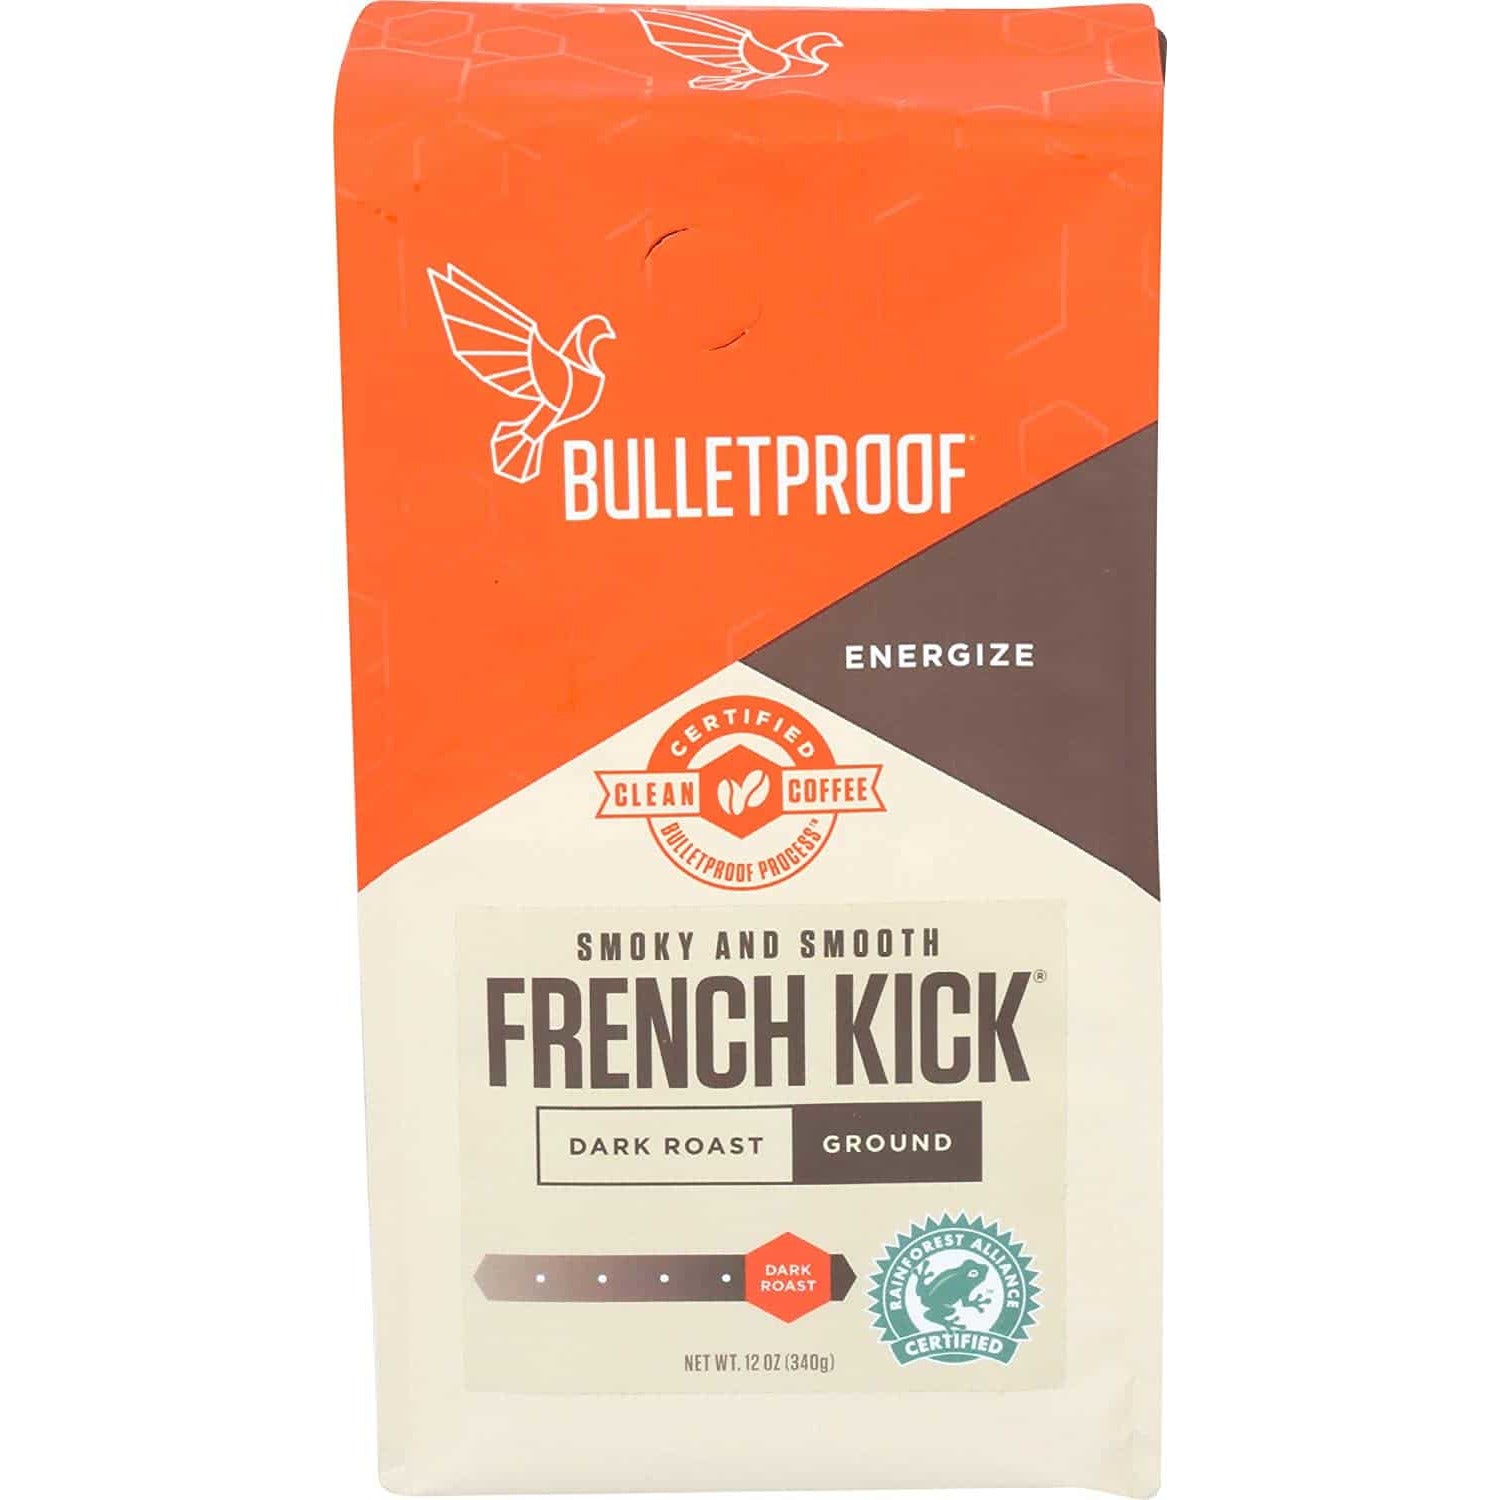 Oasis Fresh Bulletproof 'French Kick' Dark Roast, Ground Coffee, 12 oz